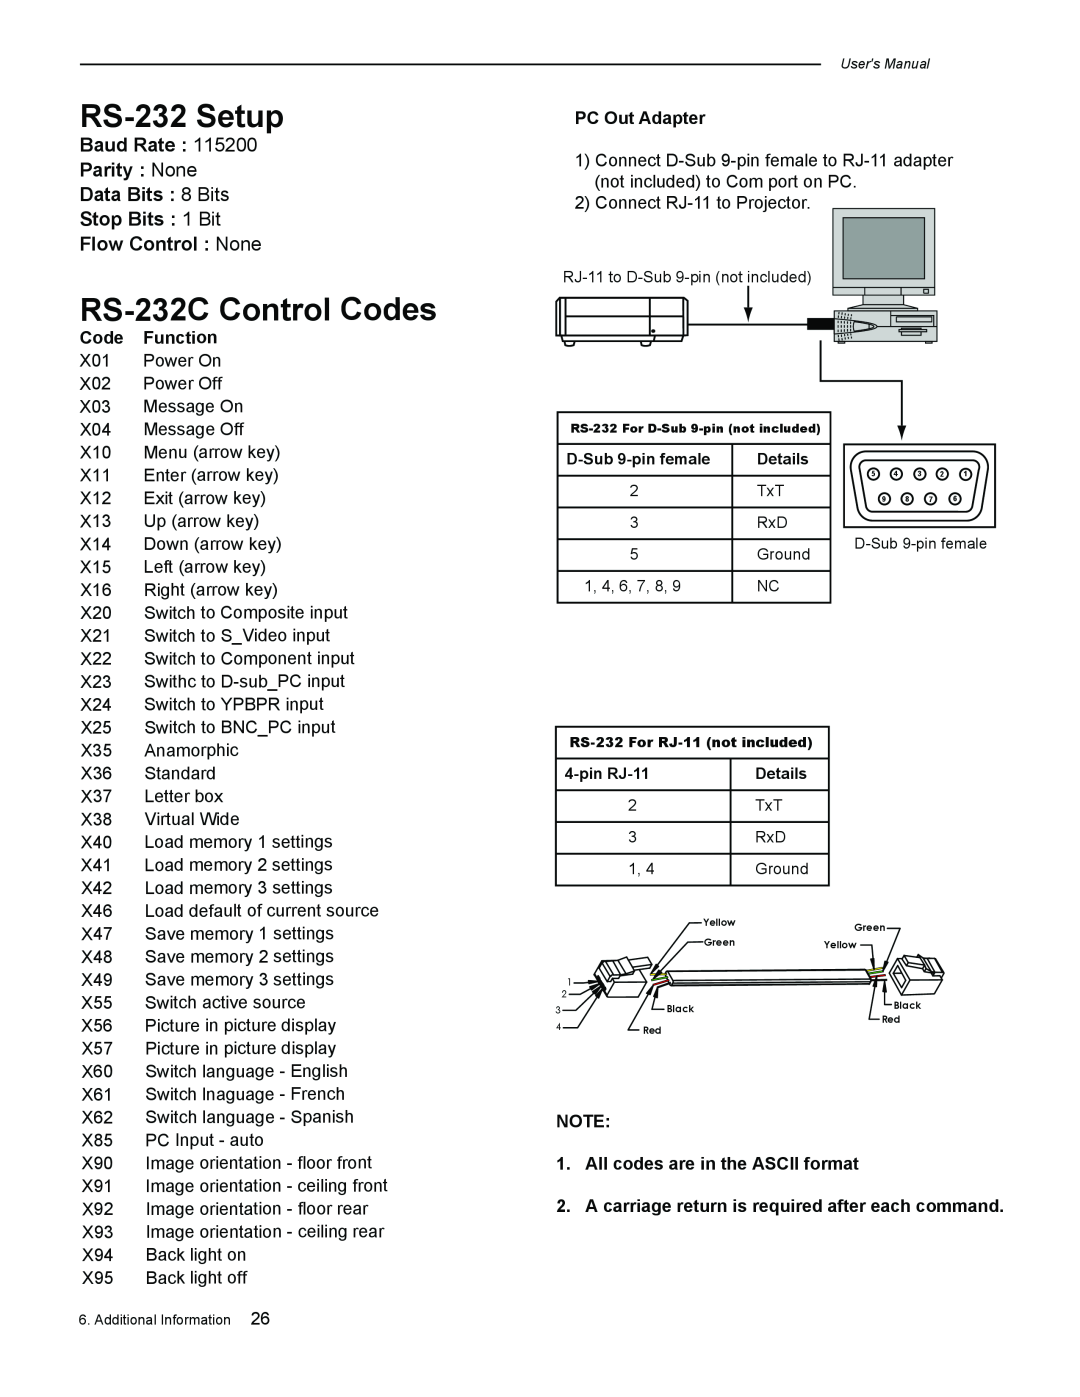 Runco CL-500 RS-232Setup, RS-232CControl Codes, Baud Rate Parity None Data Bits 8 Bits, Stop Bits 1 Bit Flow Control None 